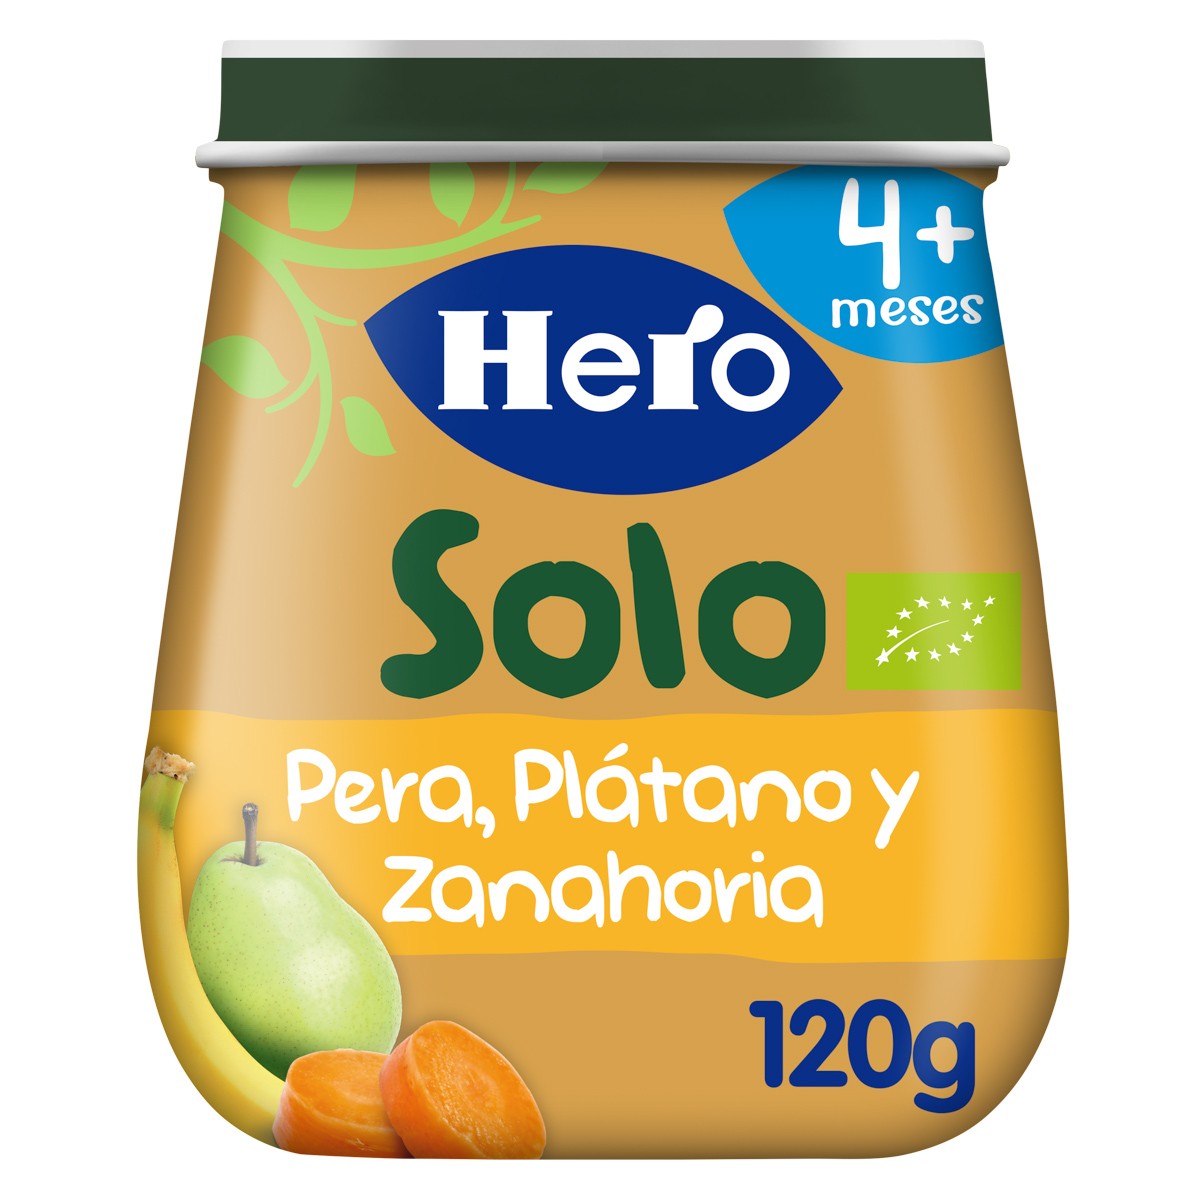 Hero Baby Solo ecológico pera plátano zanahorias 120g